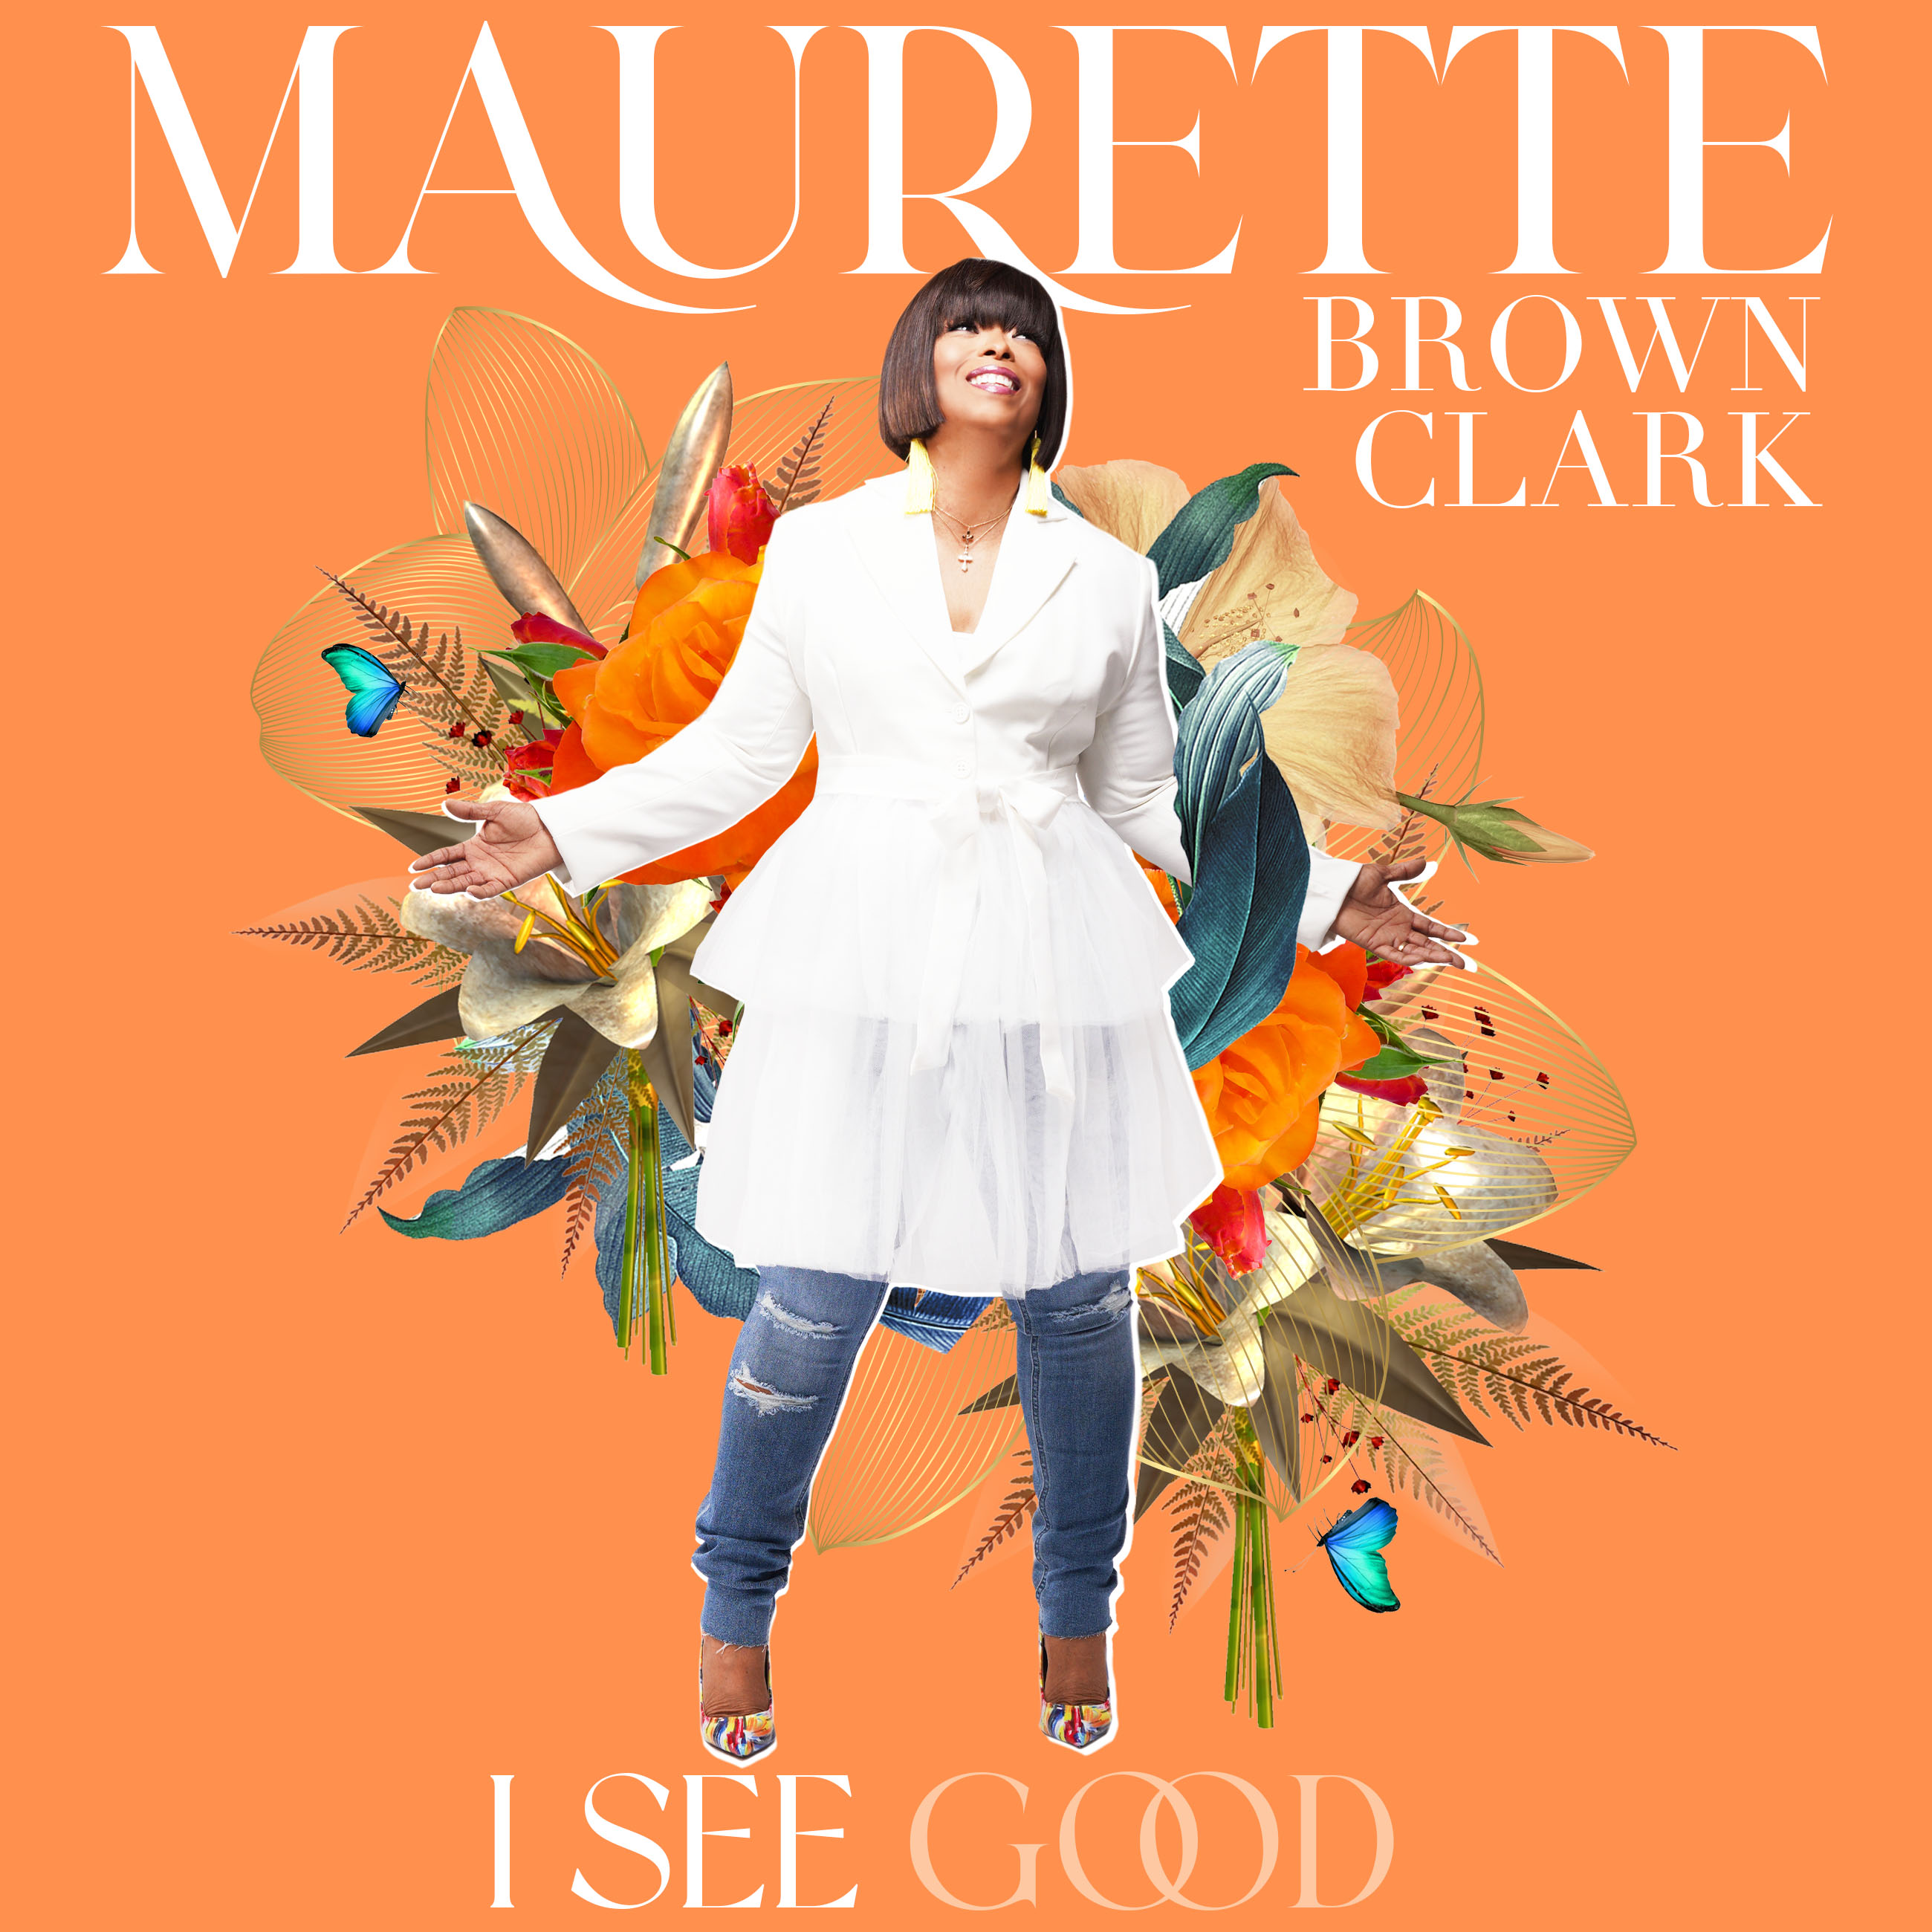 Art for I See Good by Maurette Brown Clark